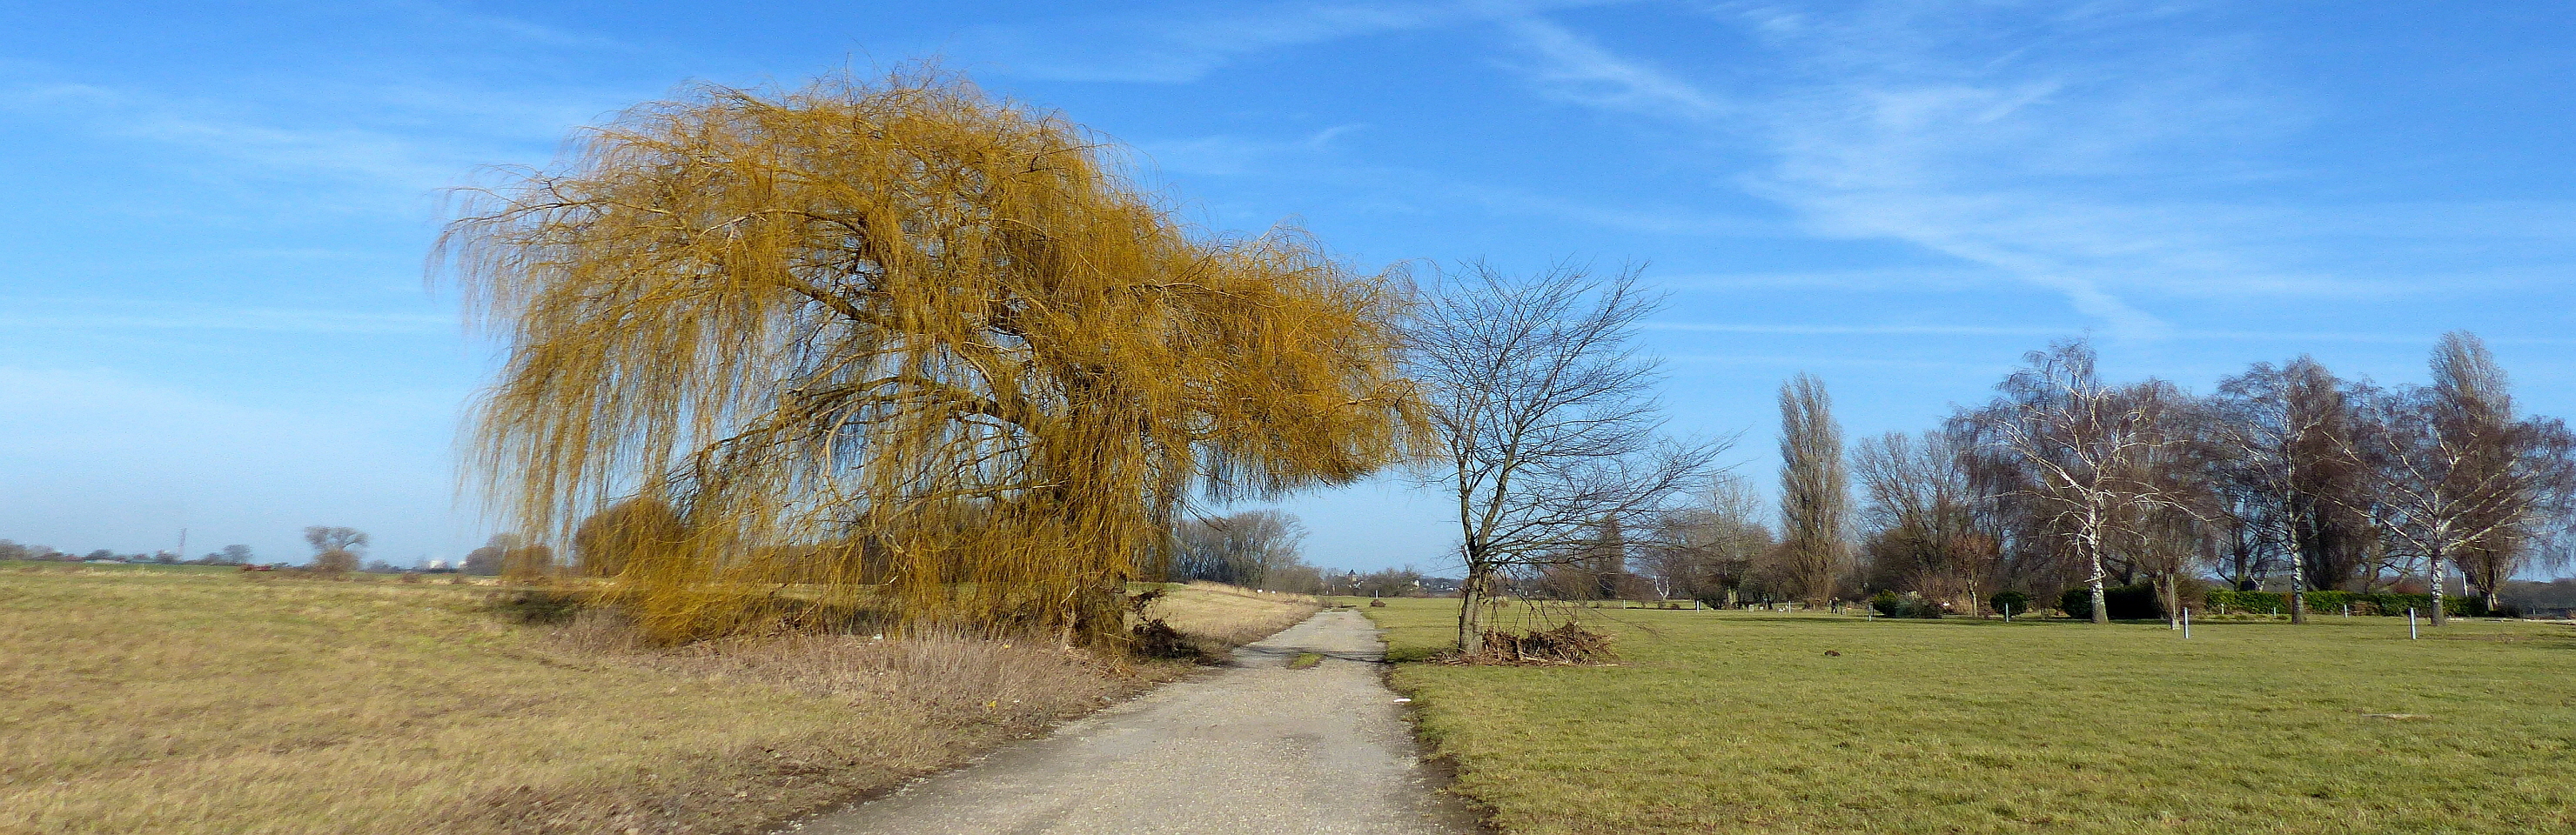 Panorama-2960x960-Meerbusch, Trees in the Rhine Meadows (719)